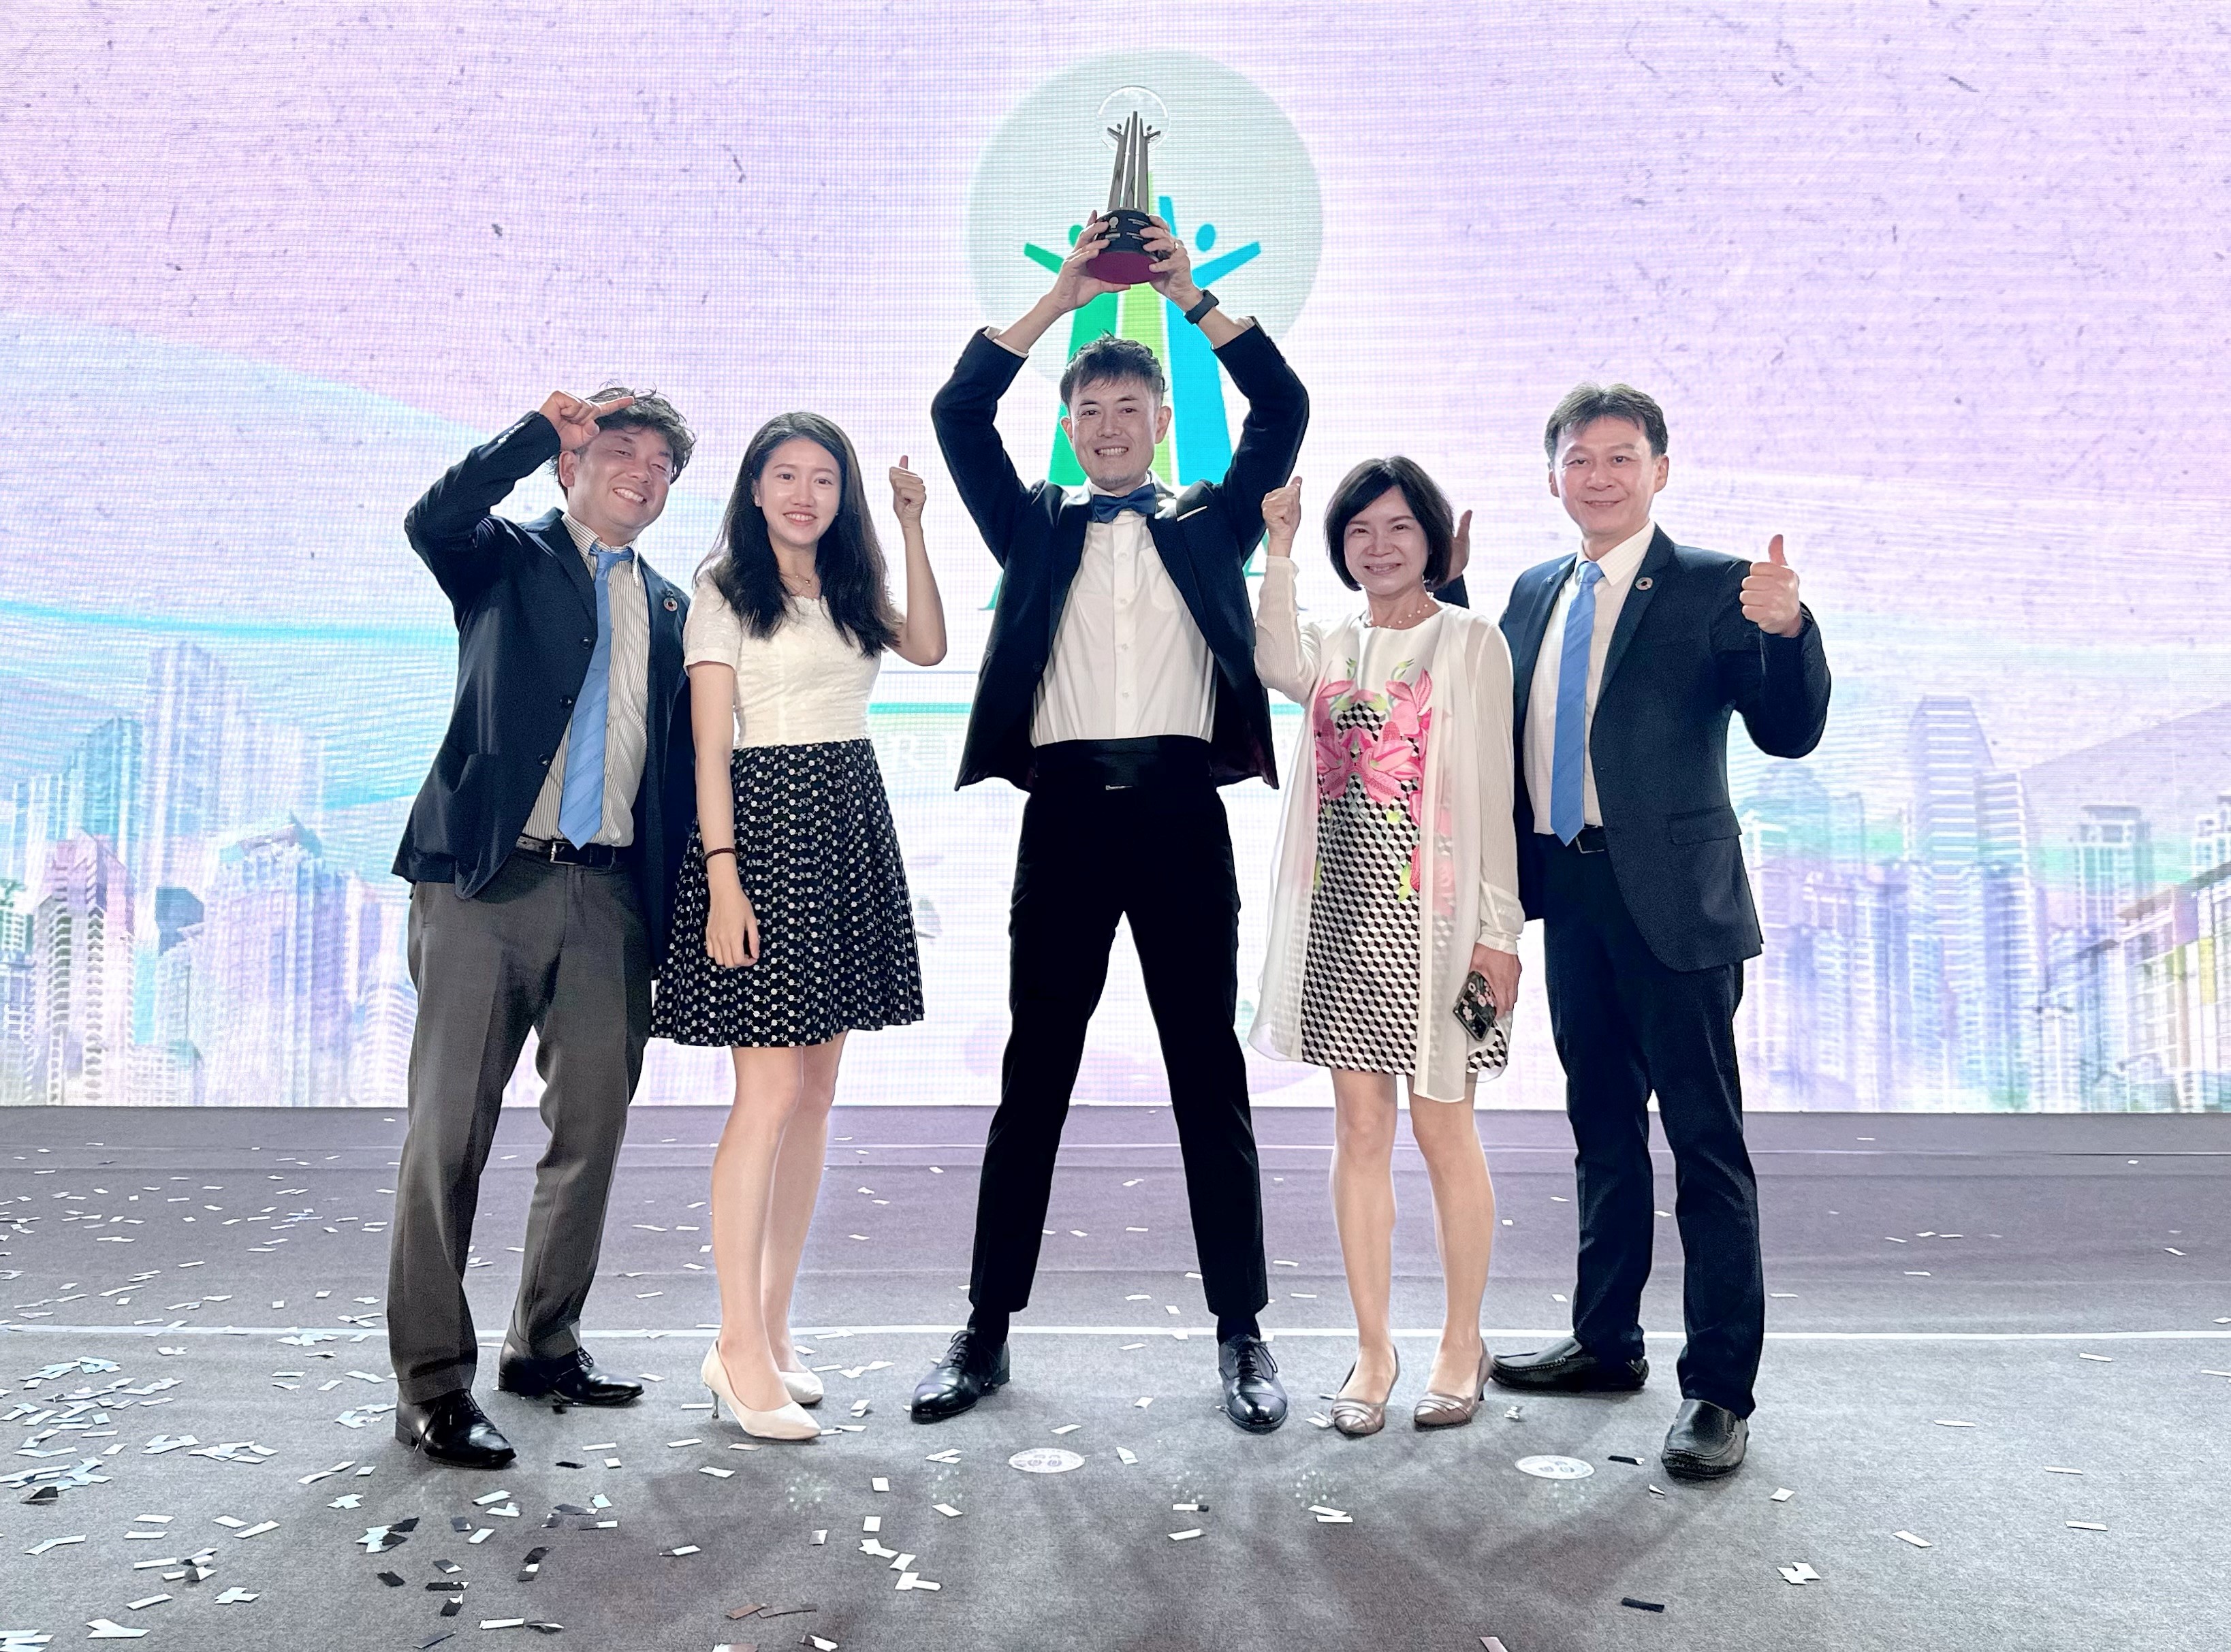 Chugai Pharma Taiwan Wins Asia Responsible Enterprise Awards for Two Consecutive Years